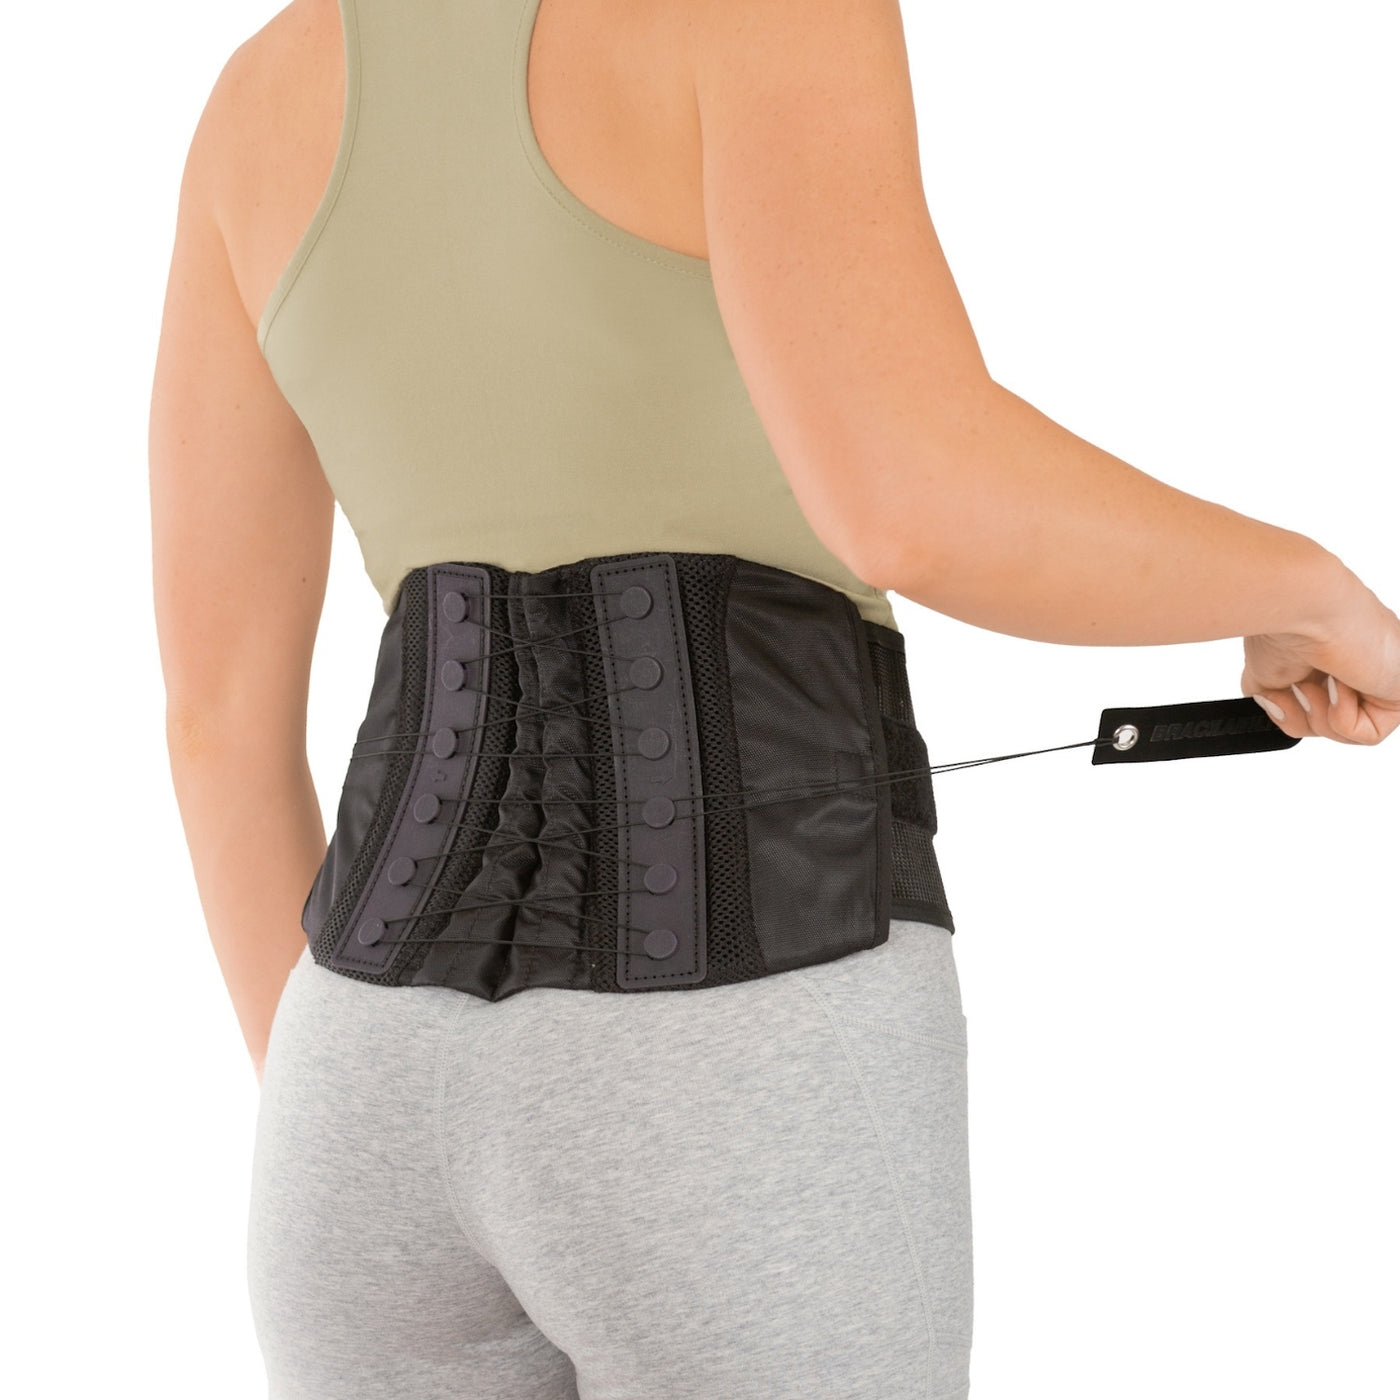 Foto de Orthopedic lumbar corset on the human body. Back brace